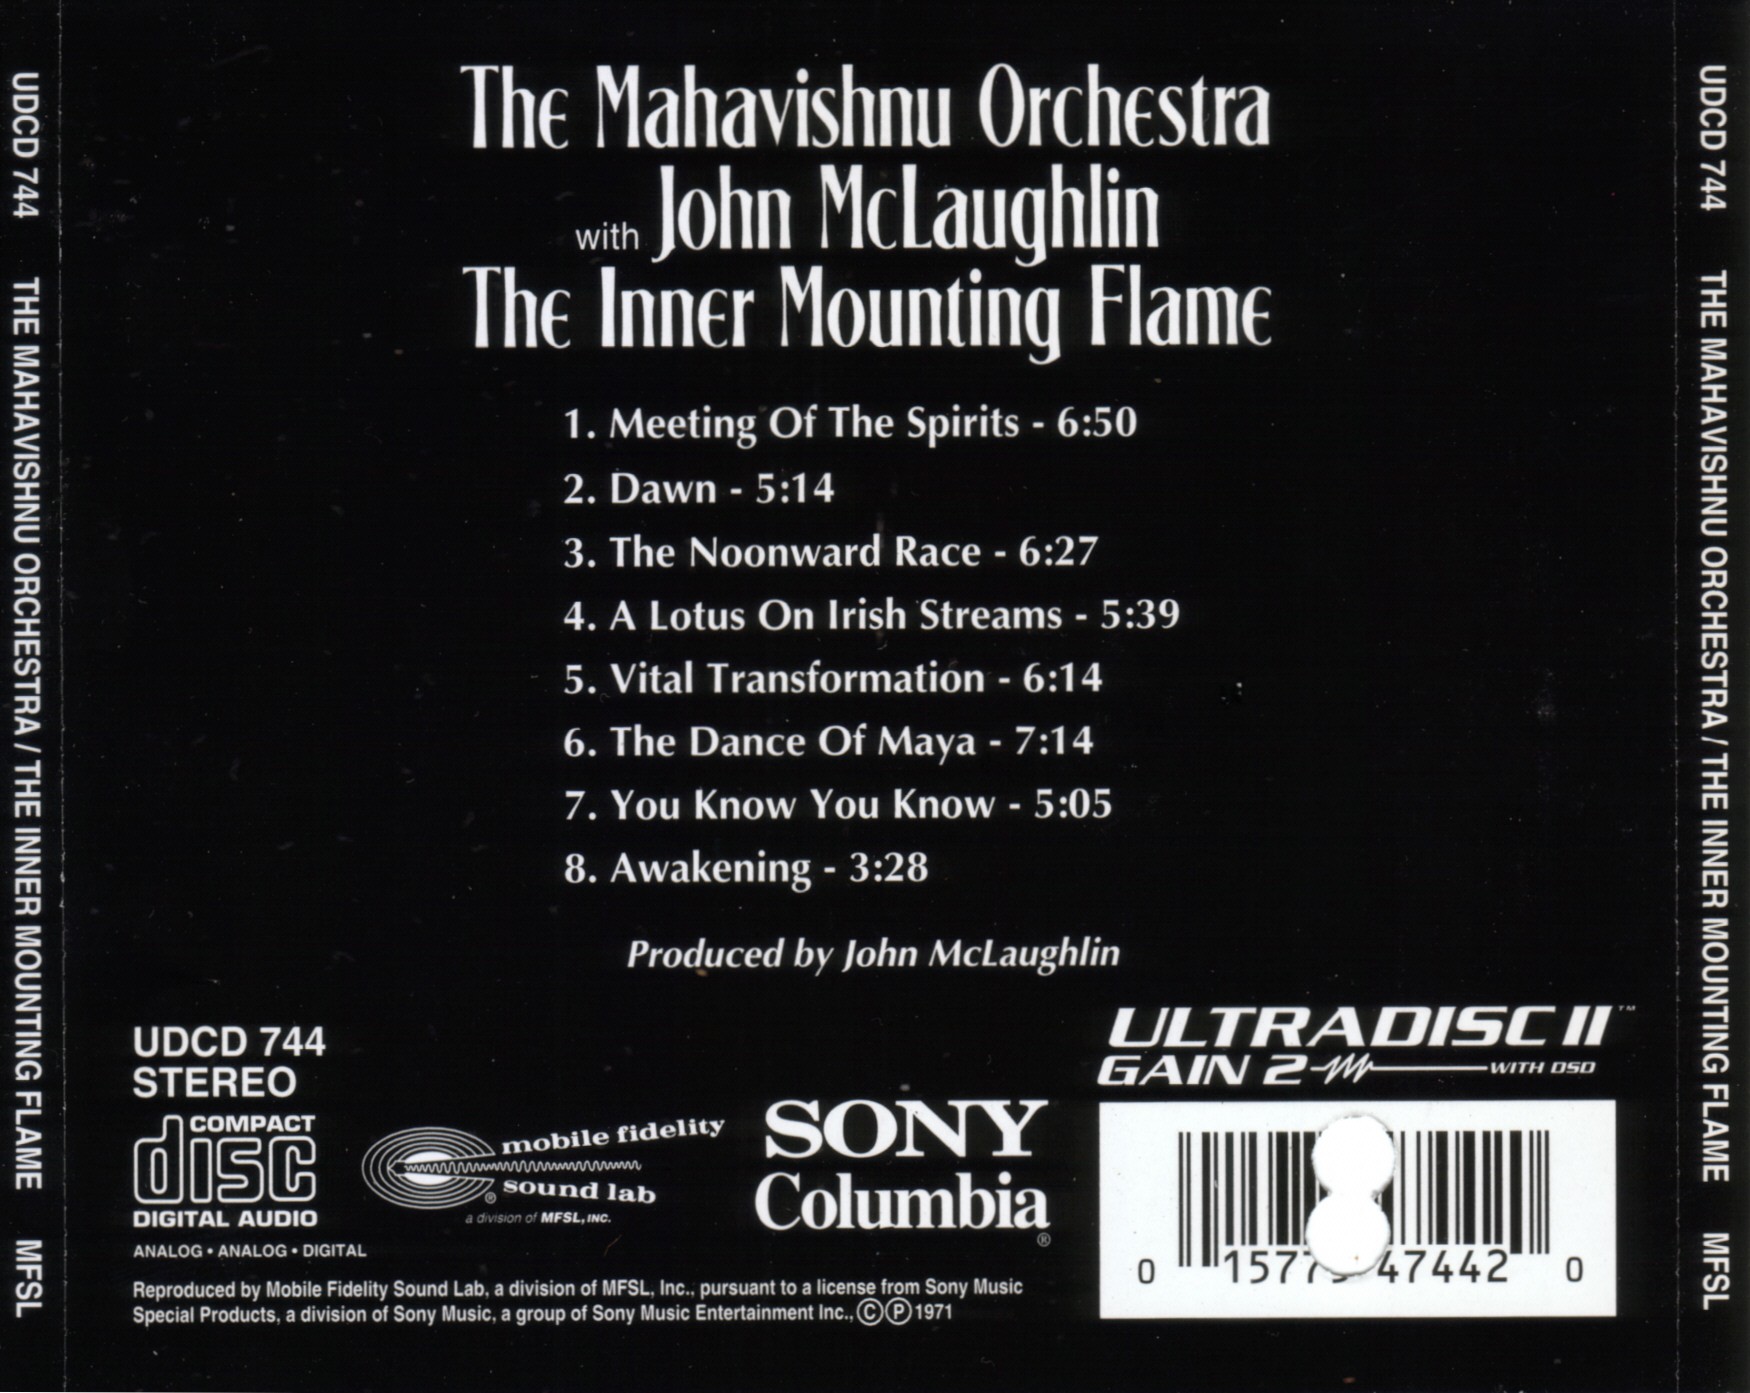 Mahavishnu orchestra. Mahavishnu Orchestra the Inner Mounting Flame 1971. The Mahavishnu Orchestra with John MCLAUGHLIN. The Mahavishnu Orchestra the Inner Mounting Flame (MFSL 24kt Gold UDCD 744). The Mahavishnu Orchestra 1973.